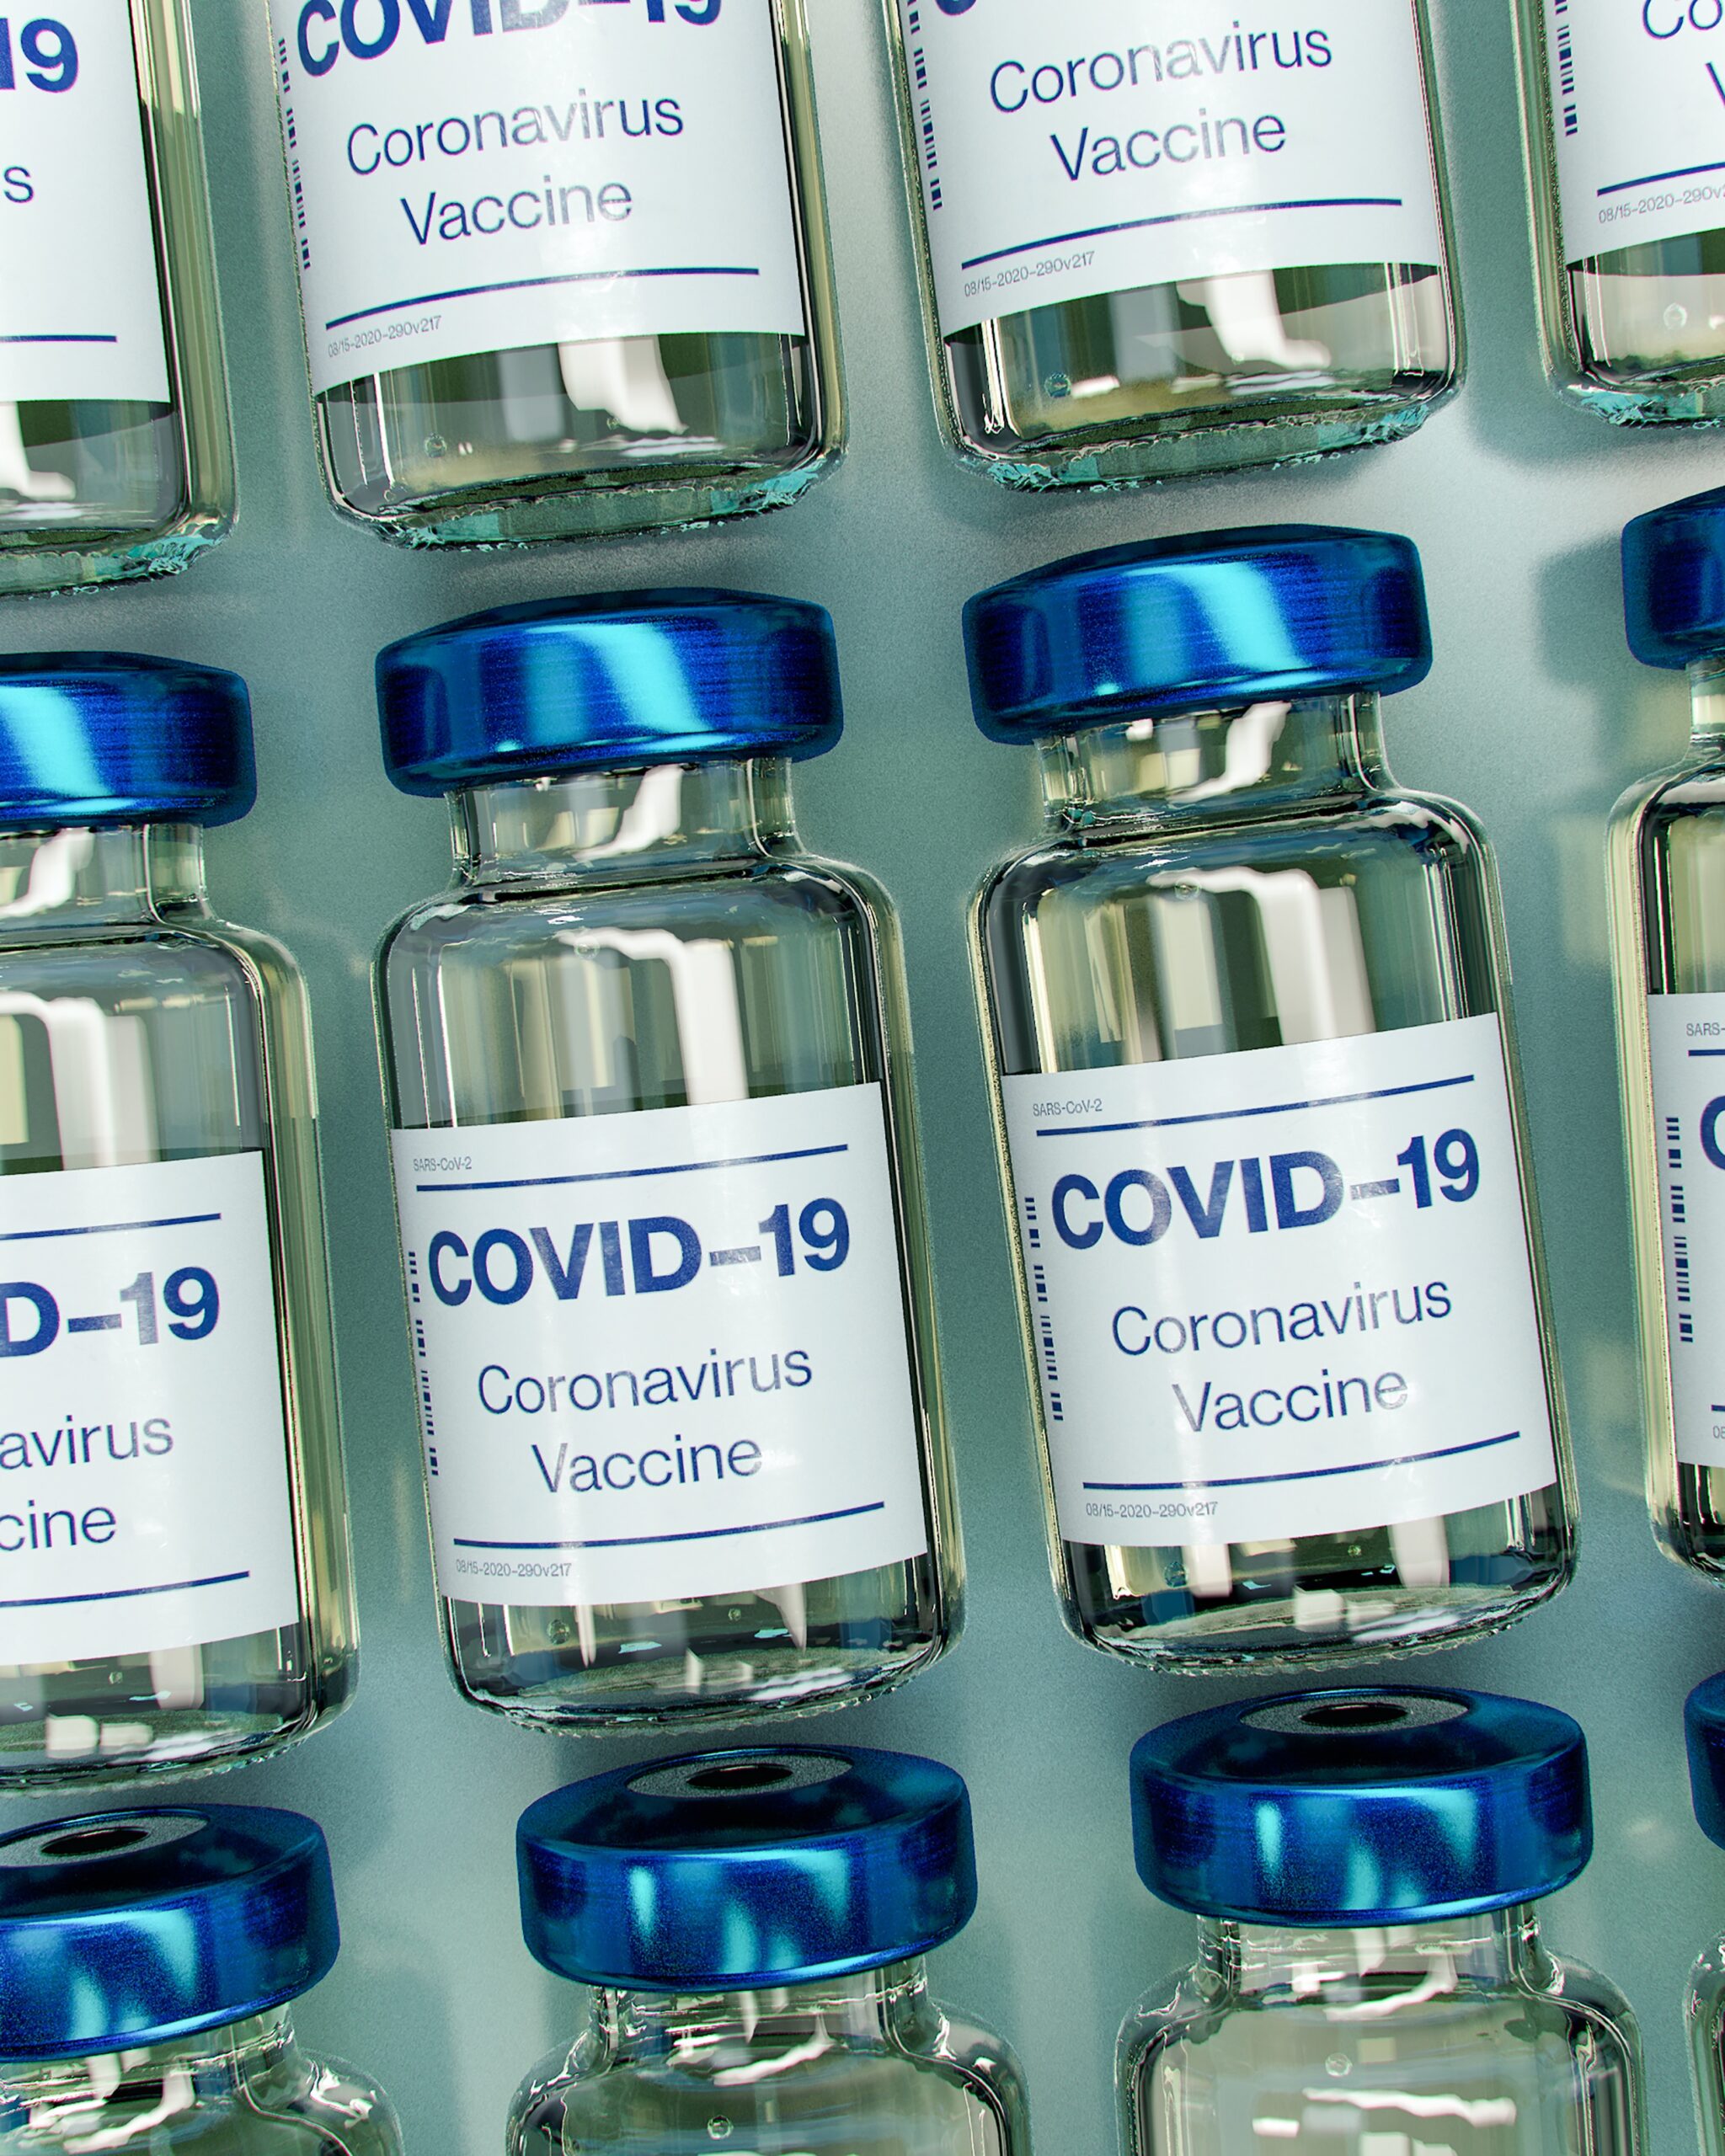 Covid19 vaccine bottle Photo credit: Unsplash